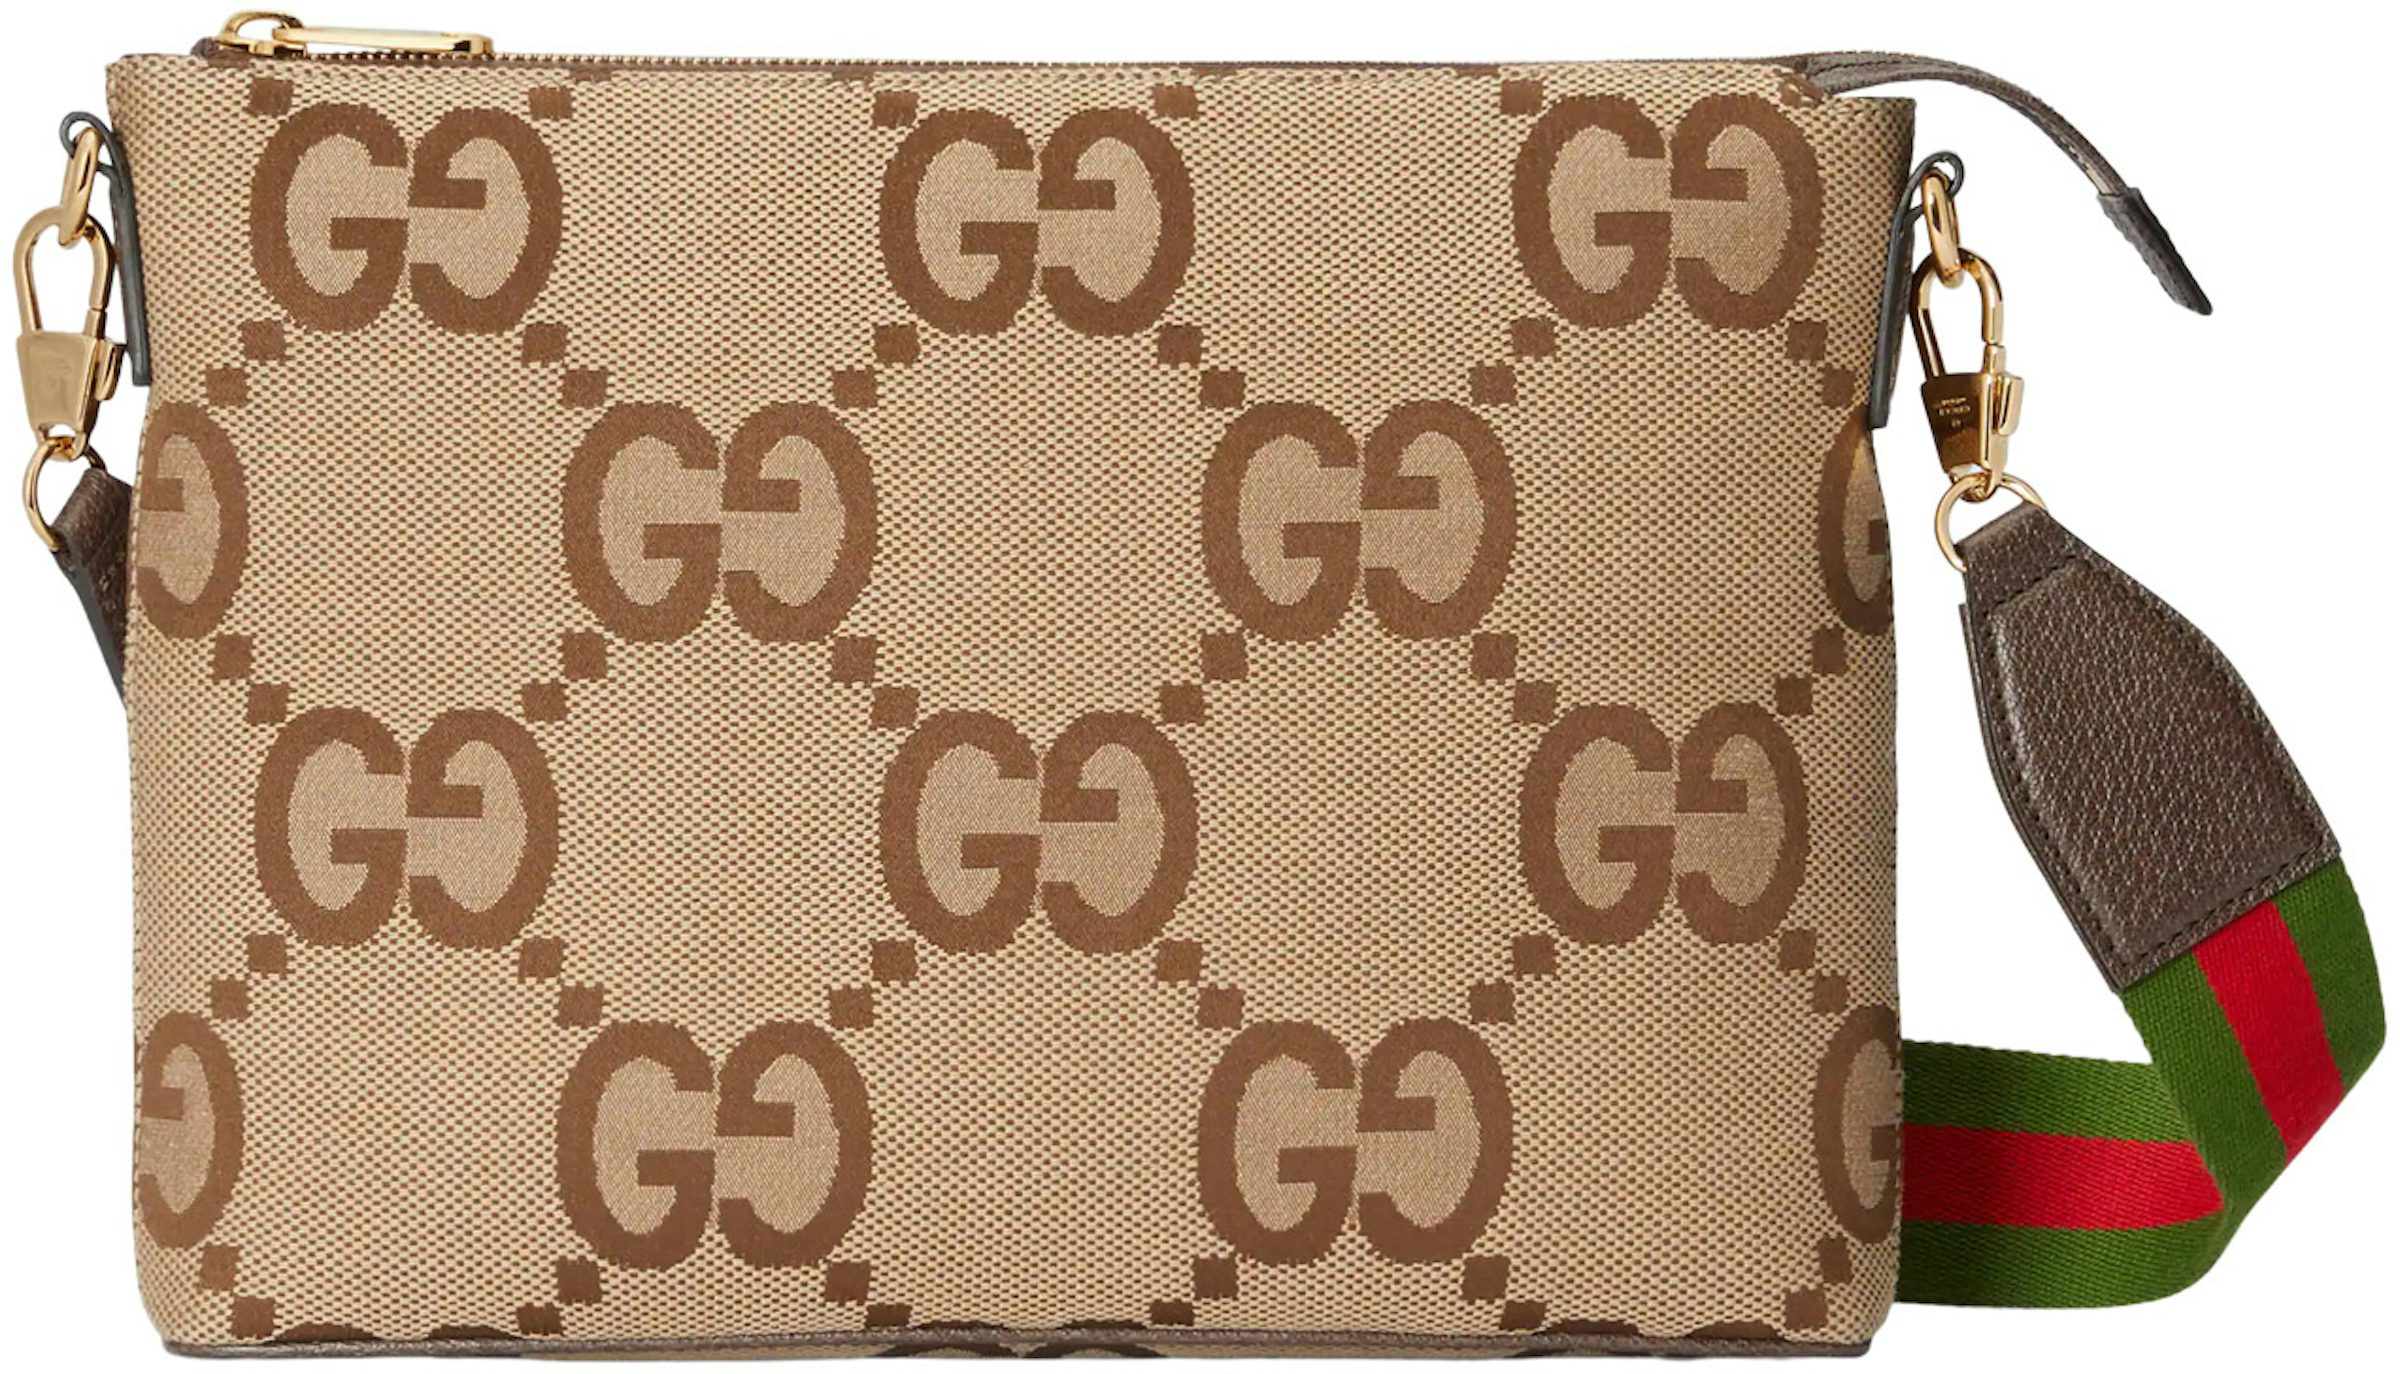 Jumbo GG medium messenger bag